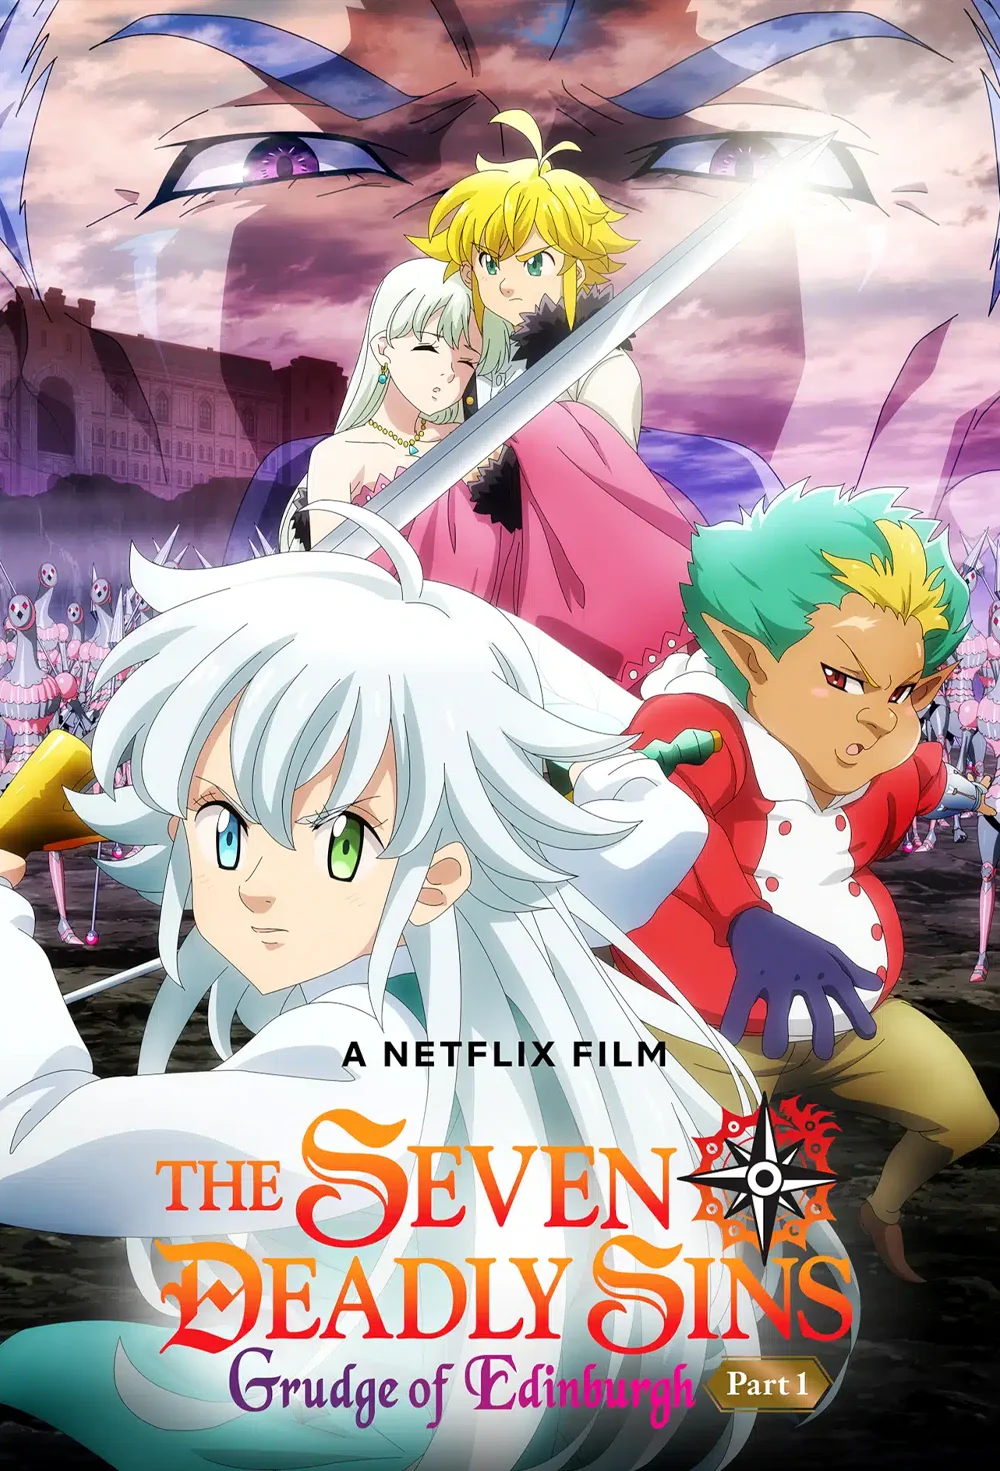 anime : The Seven Deadly Sins : Grudge of Edinburgh - Part.1